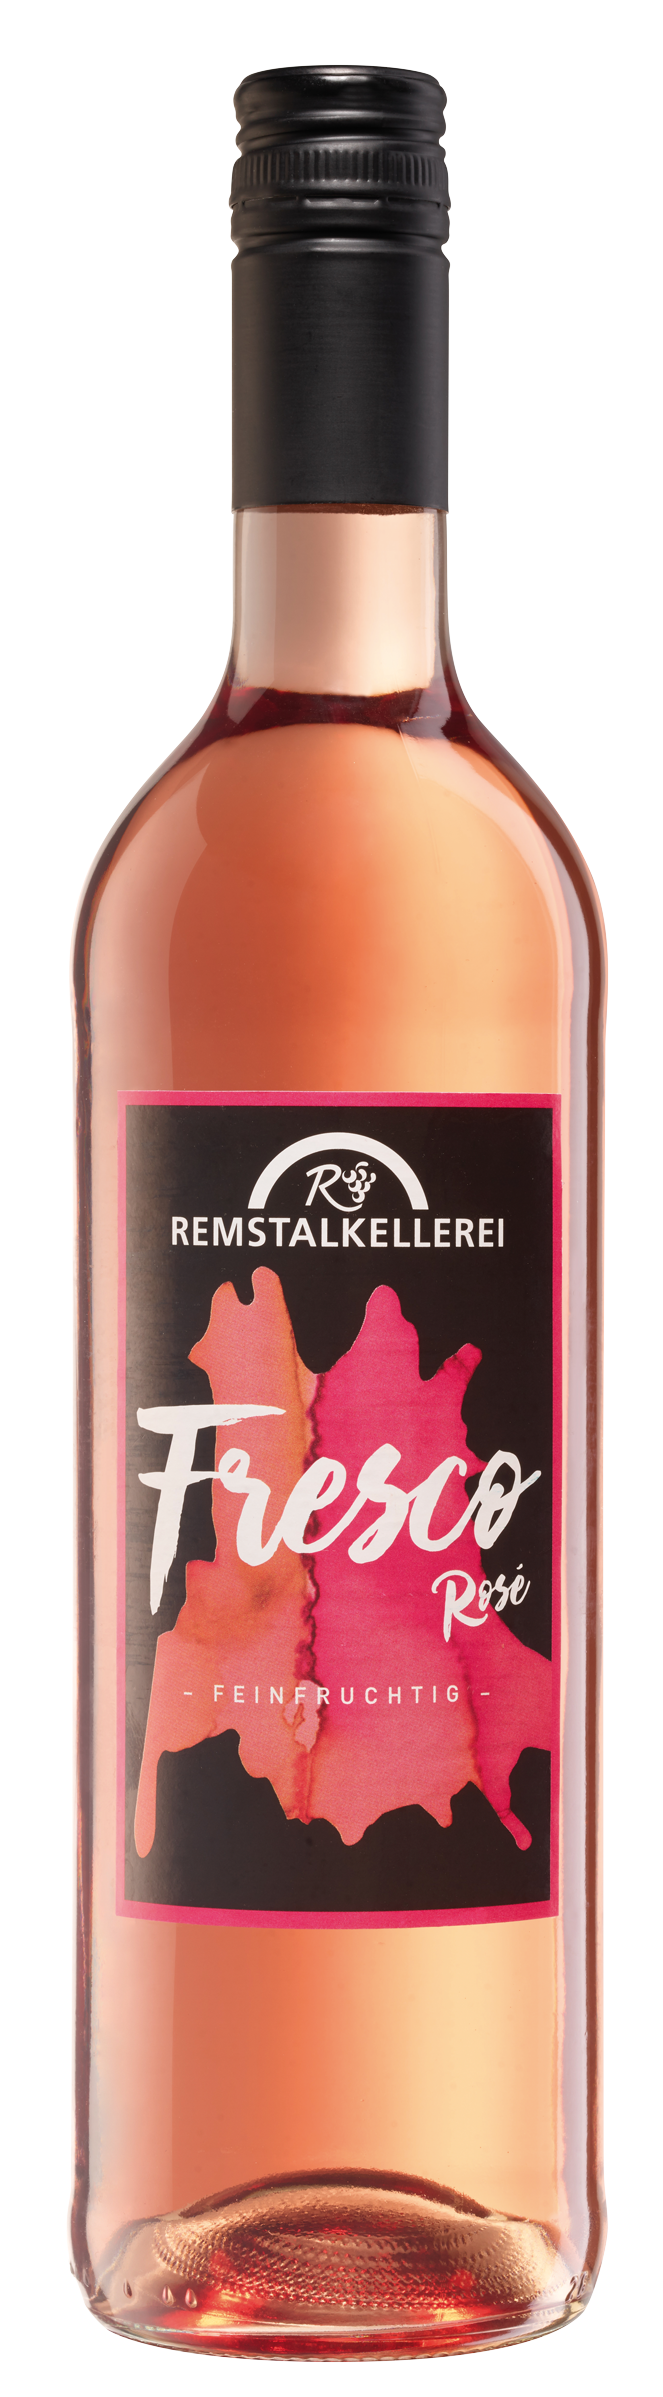 Fresco Rosé Qualitätswein - feinfruchtig -